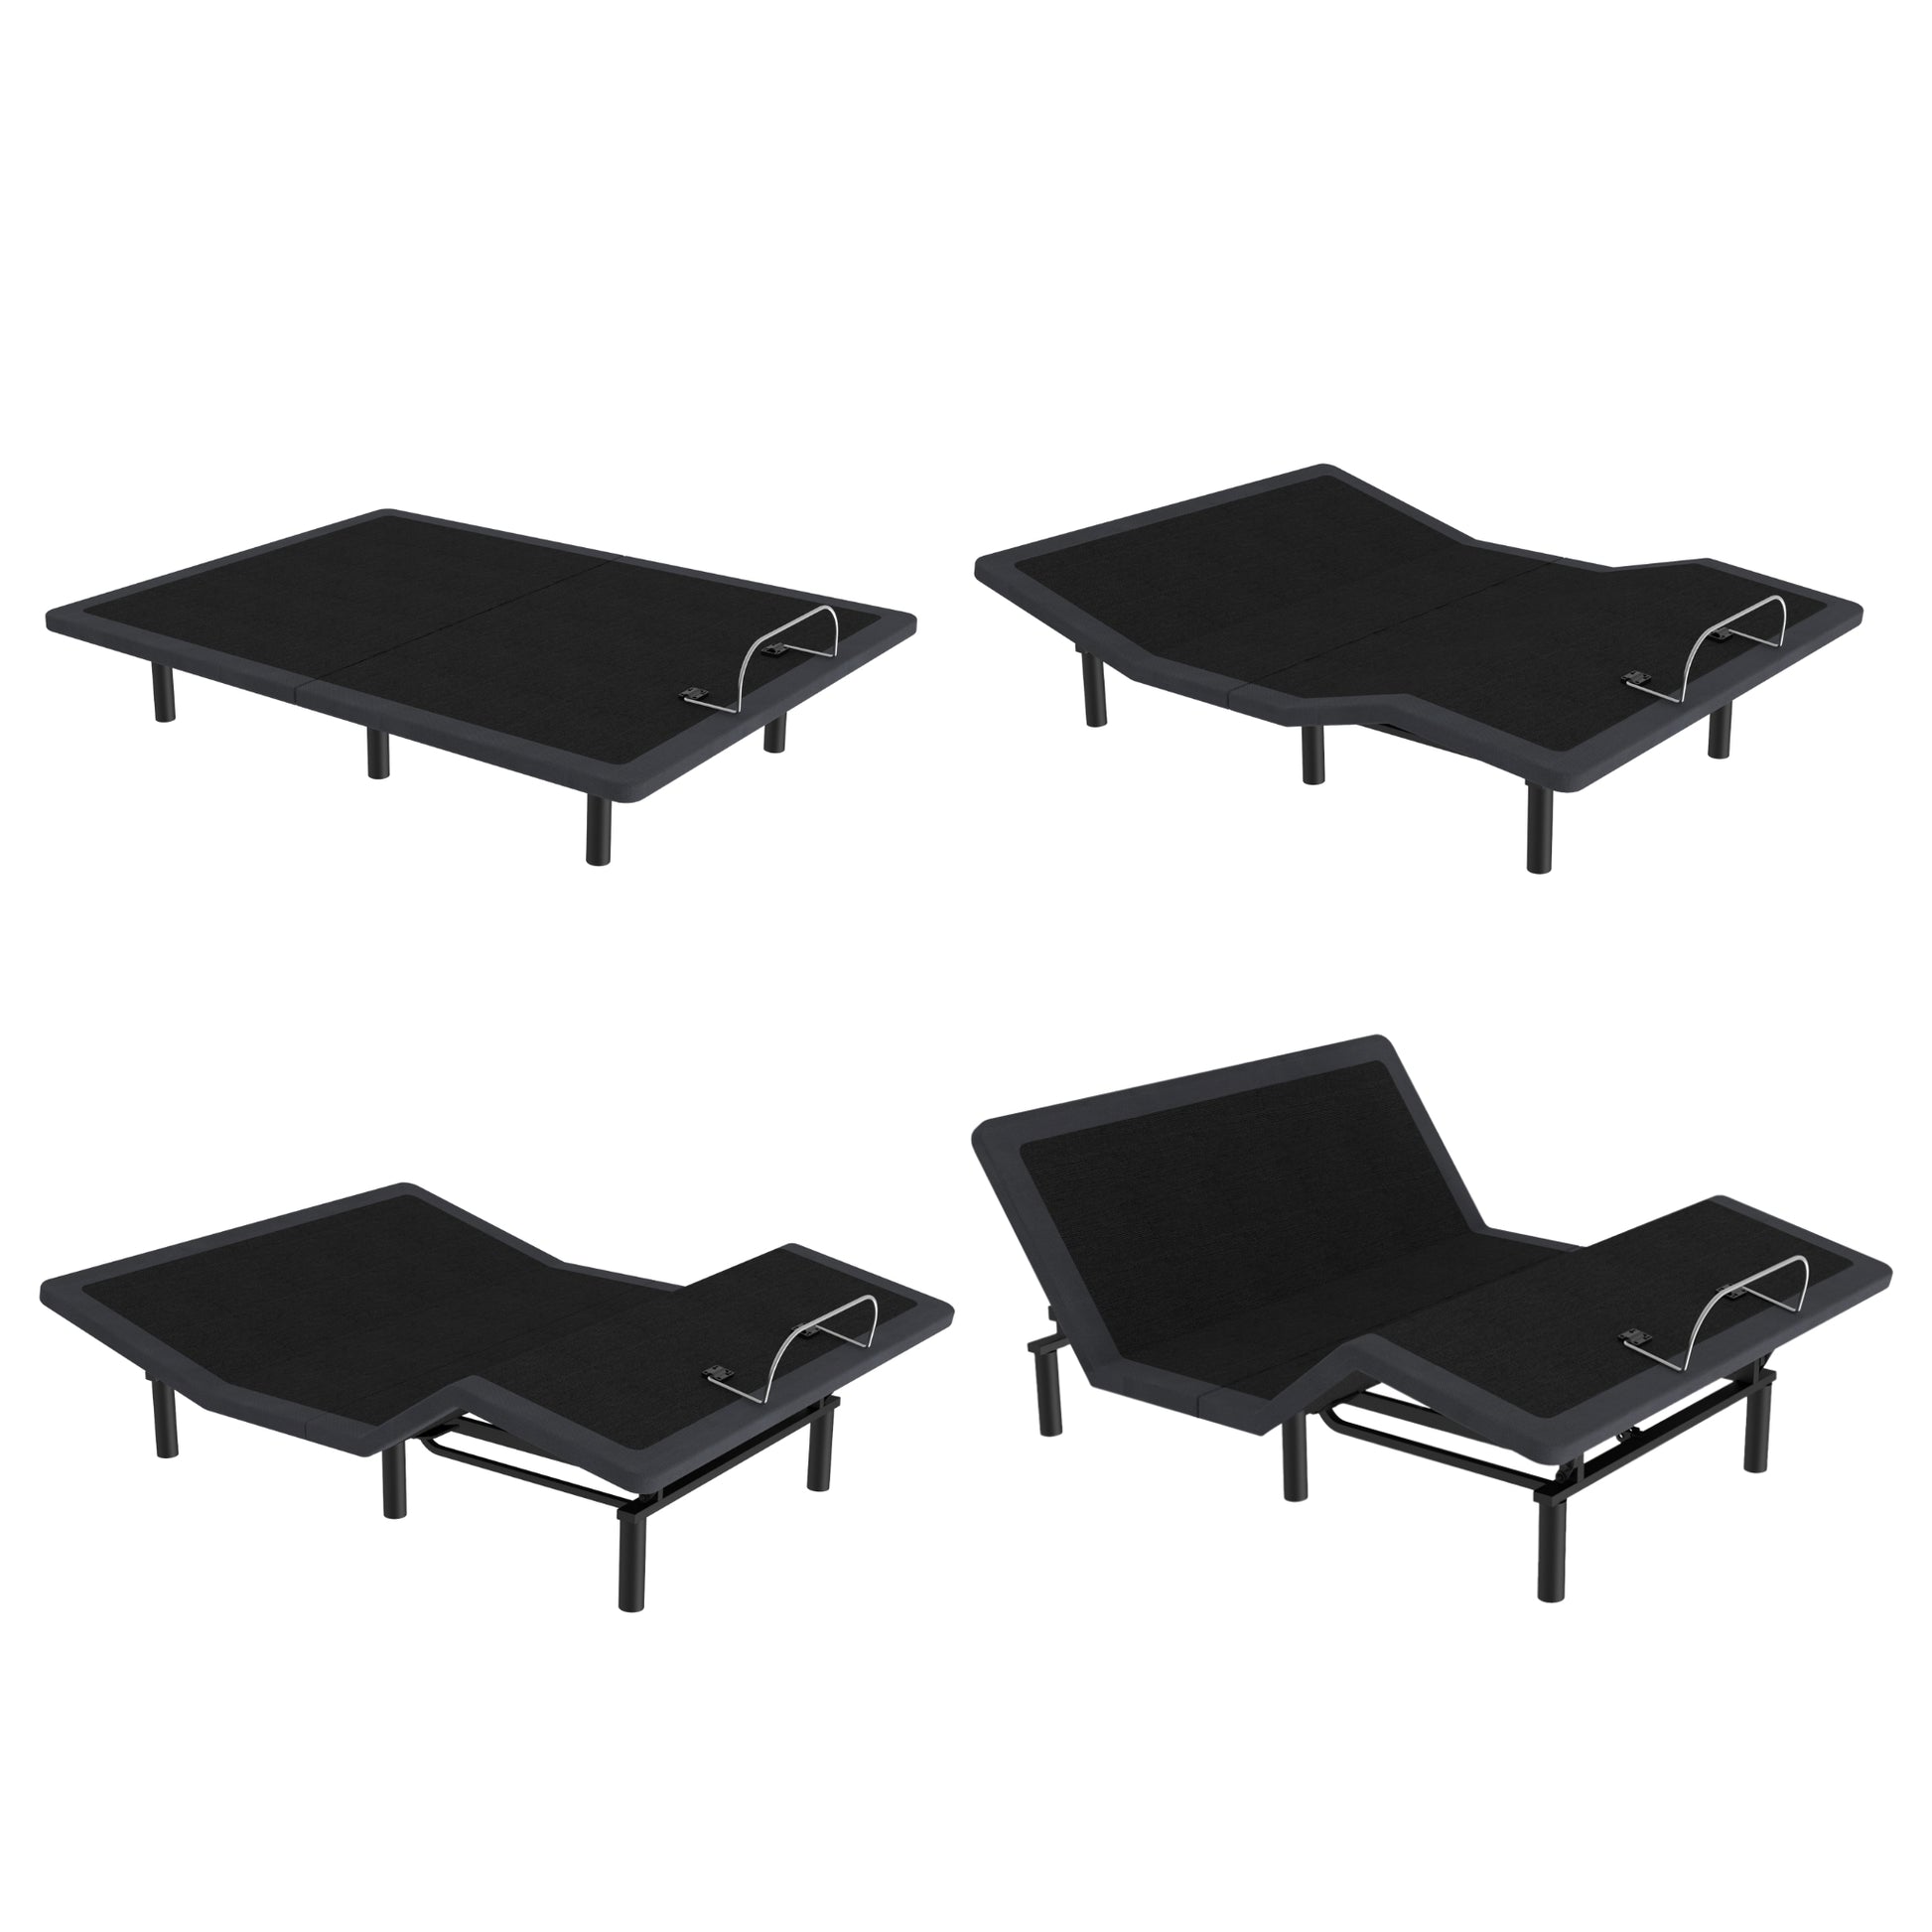 Drift Pro – Adjustable Bed Frame positions